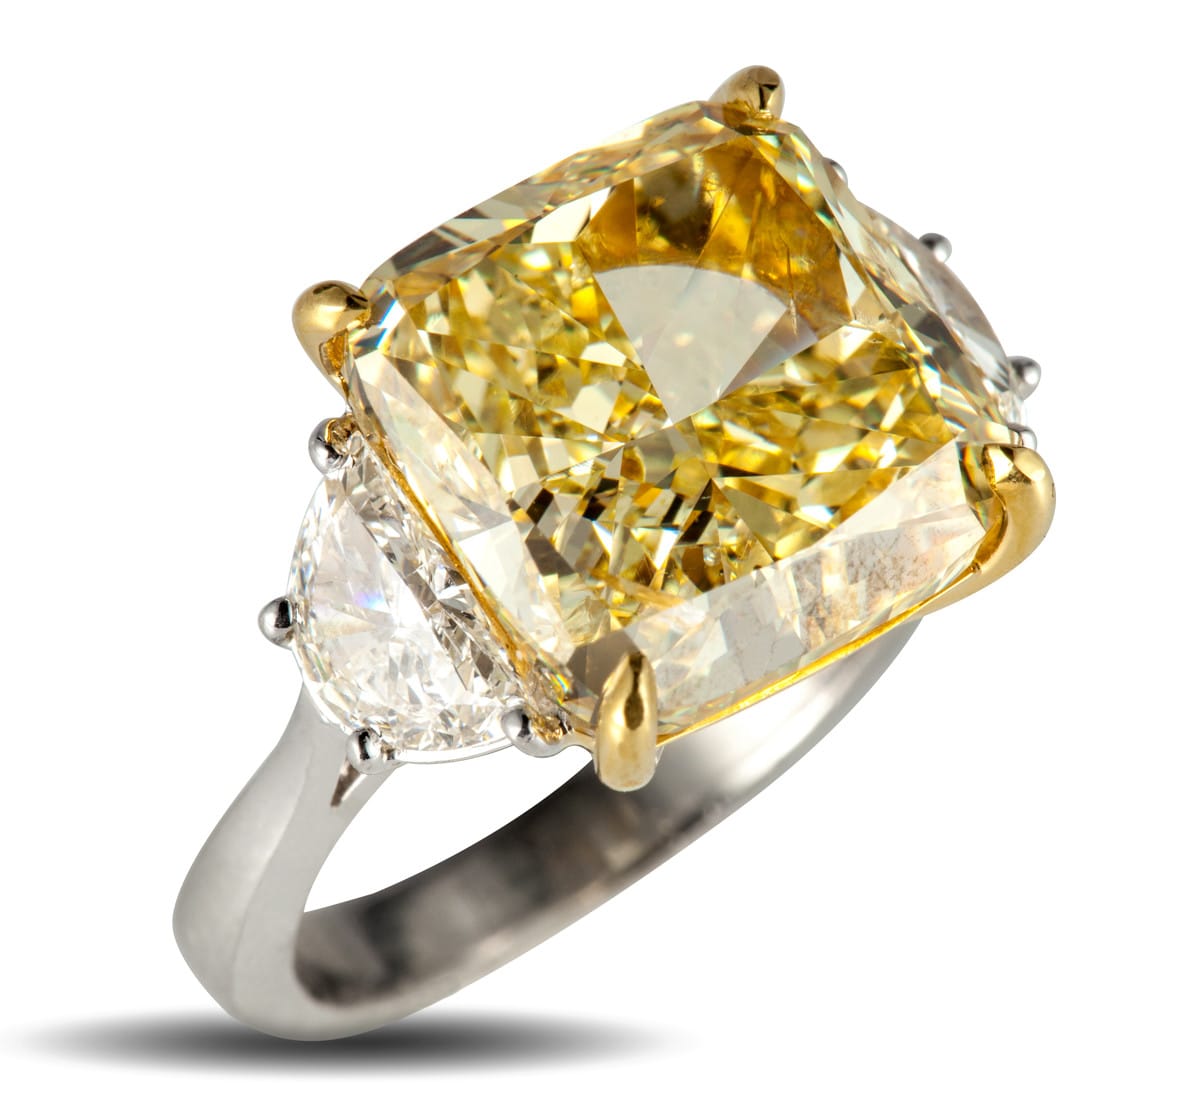 4 carat rectangle diamond ring